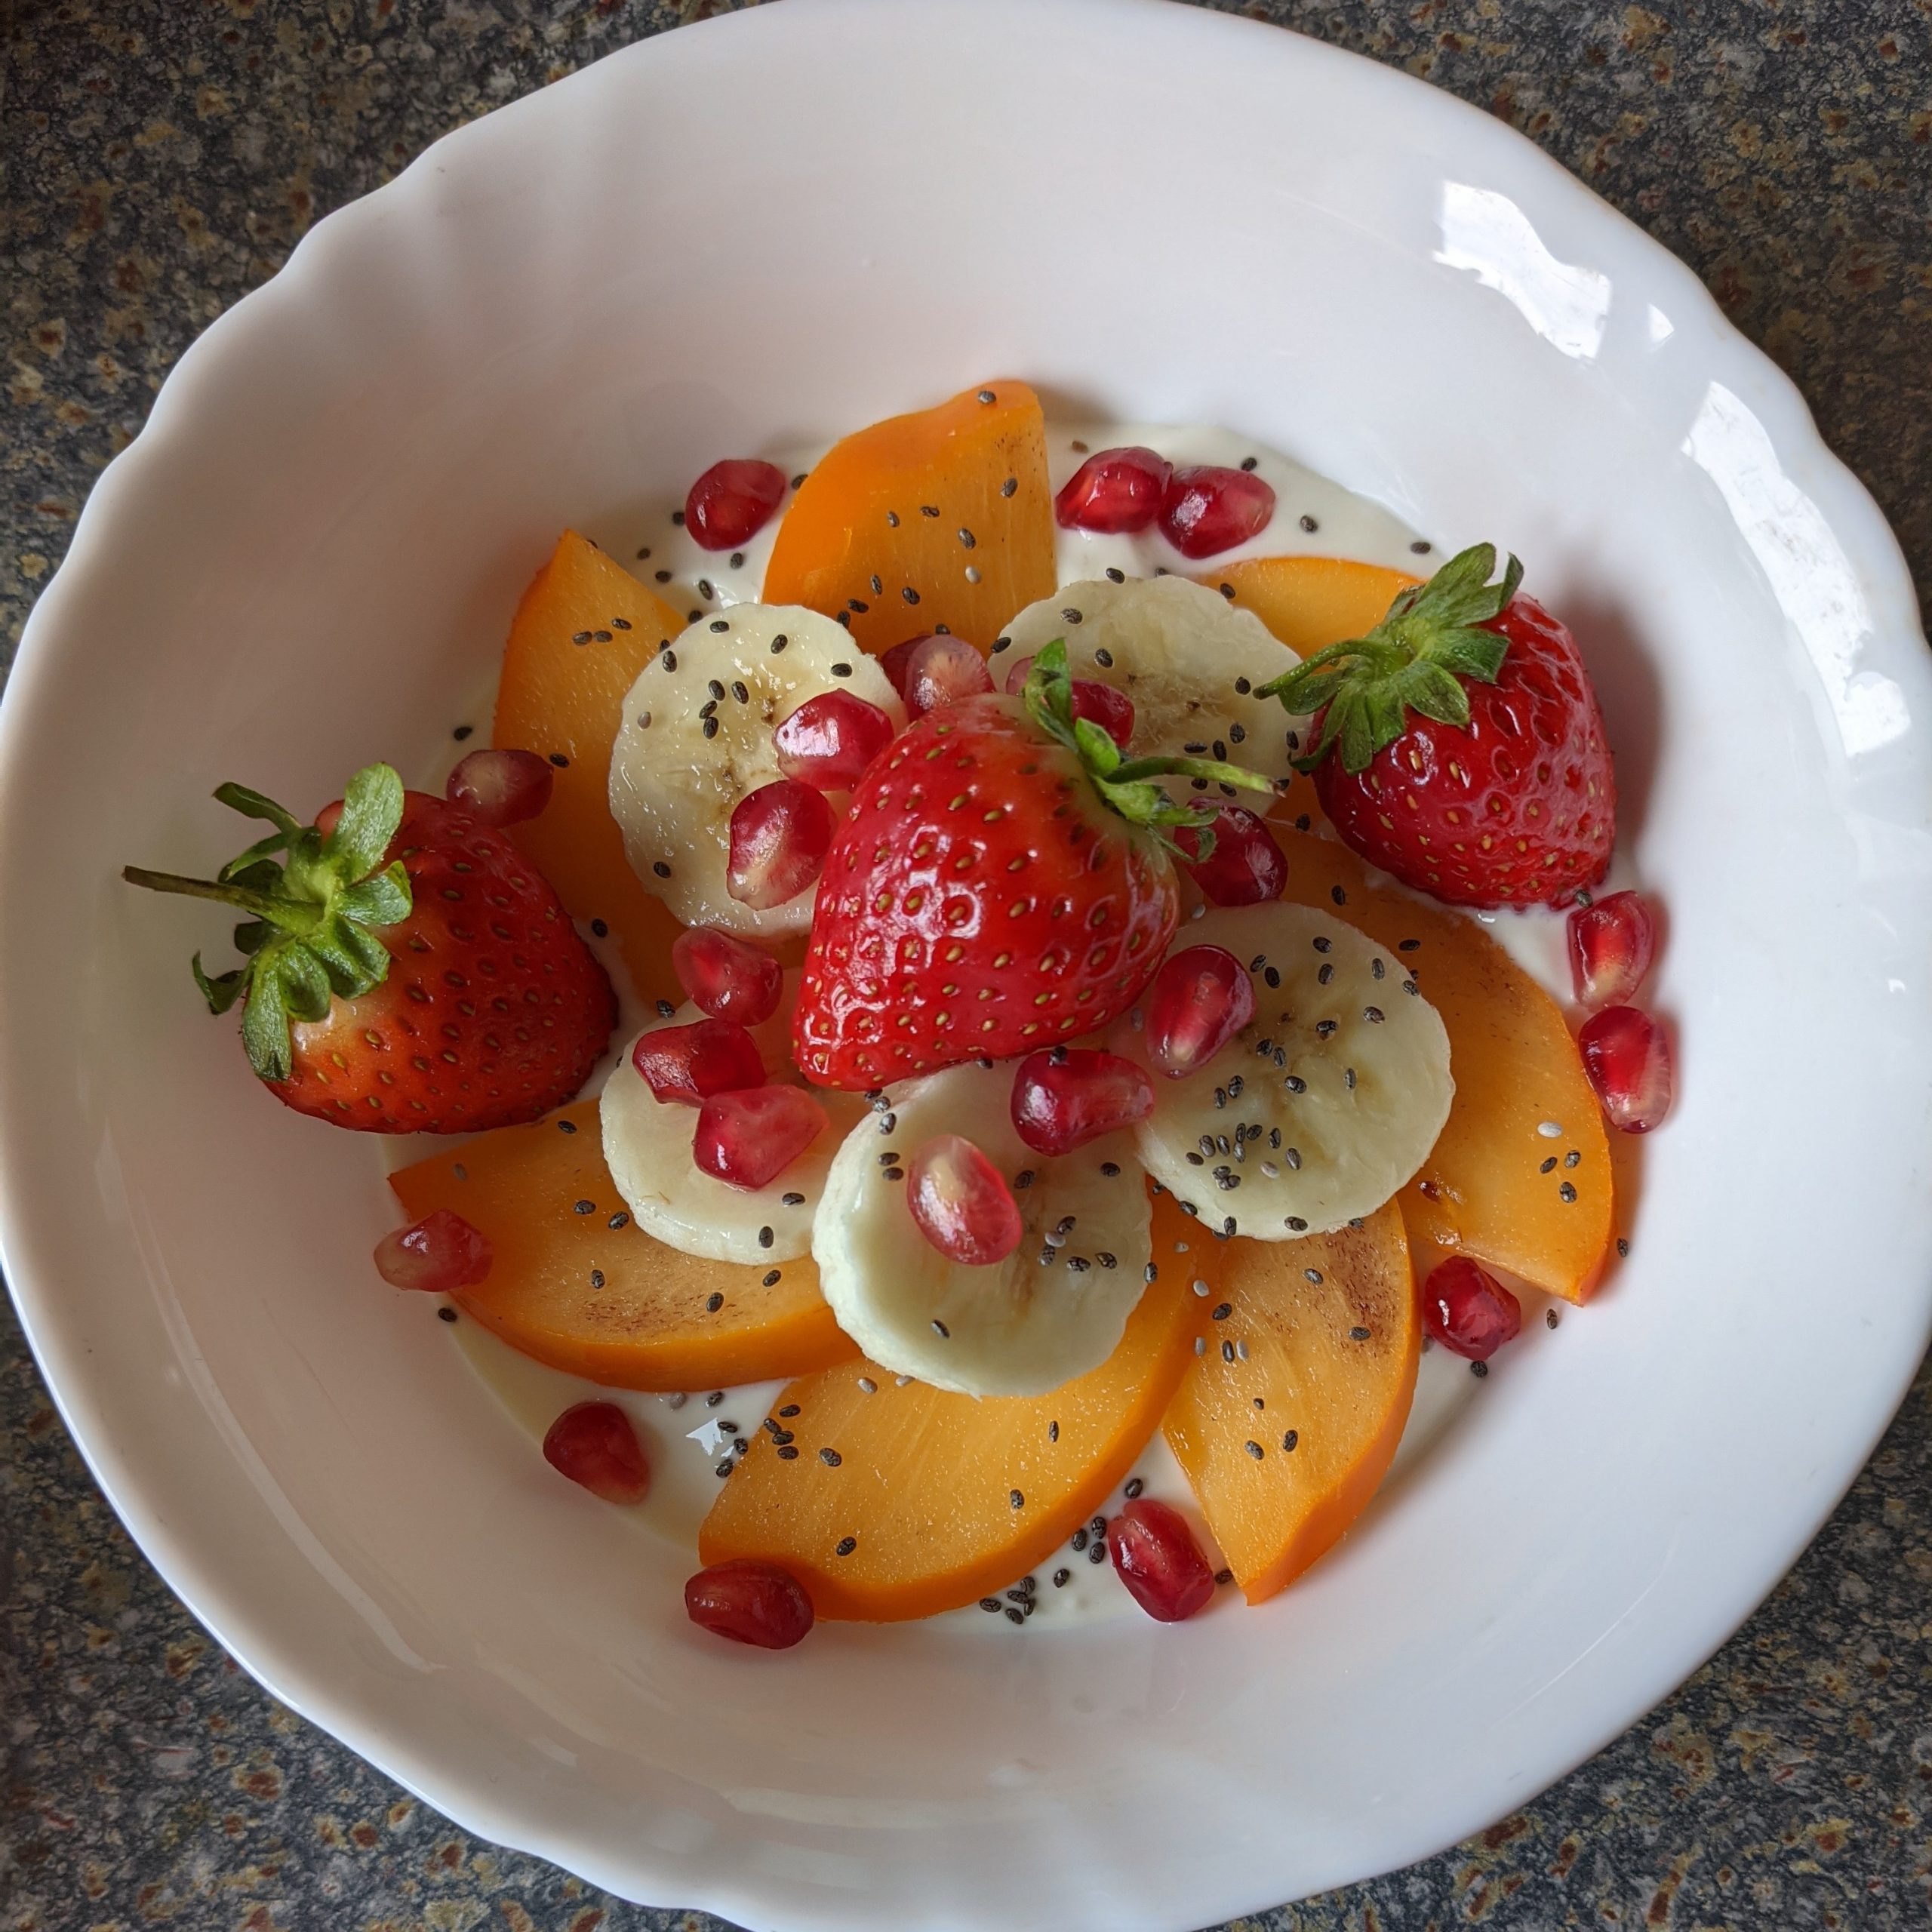 Breakfast-Yoghurt-Bowl-Recipe-with-Persimmon-Strawberries-Banana-Pomegranate-Arils-Chia-Seeds-Vanilla-Yoghurt-Recipe